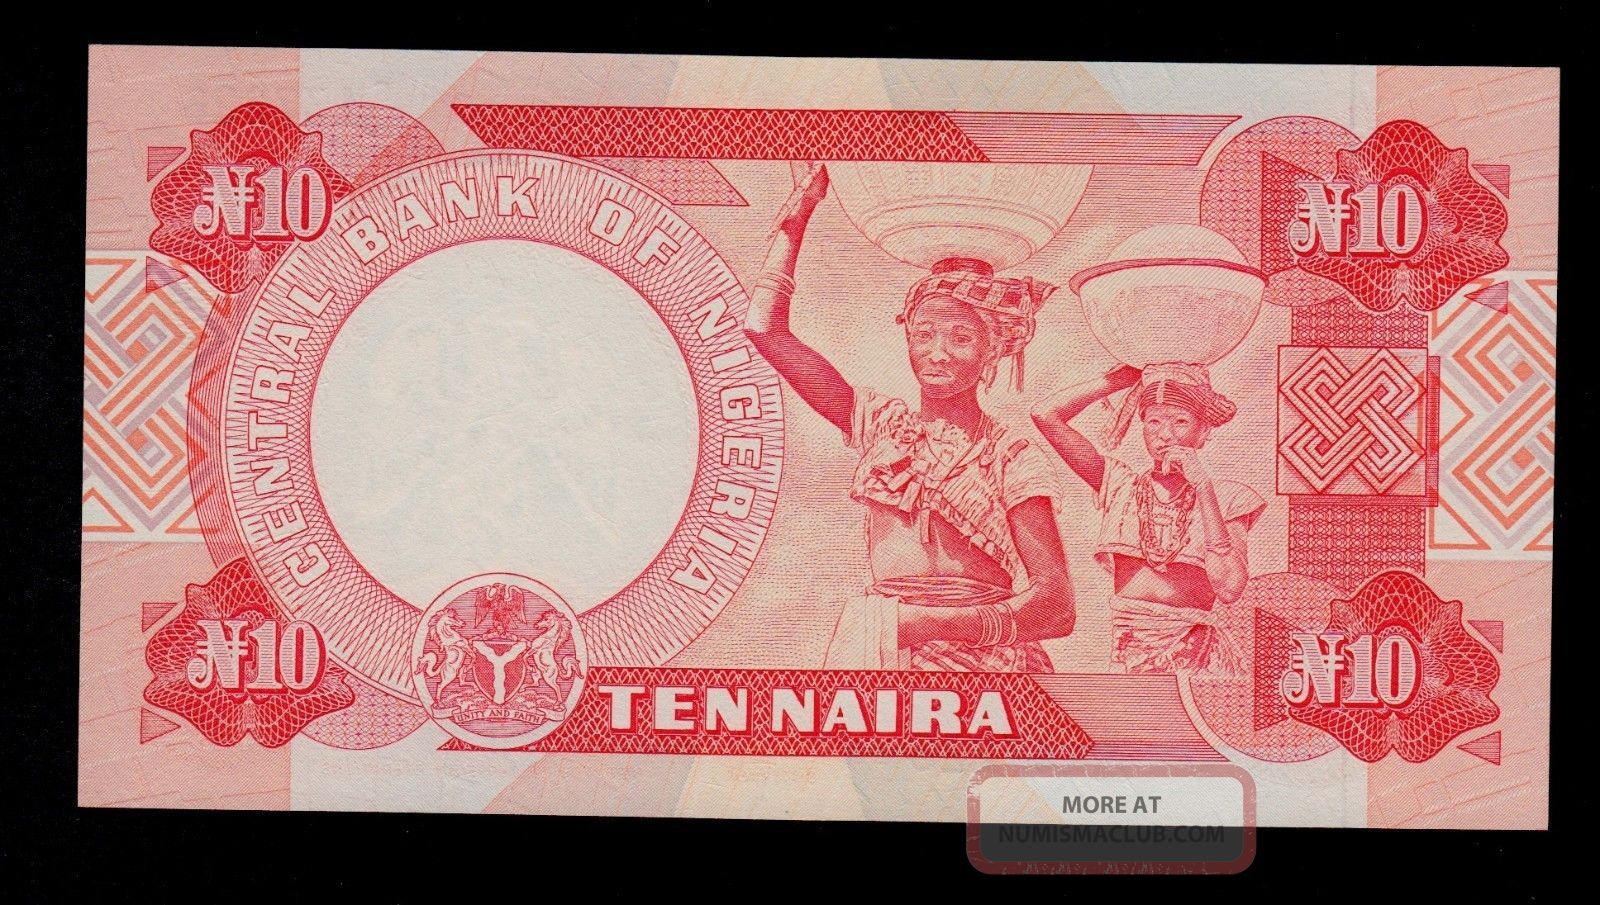 current price of btc in naira